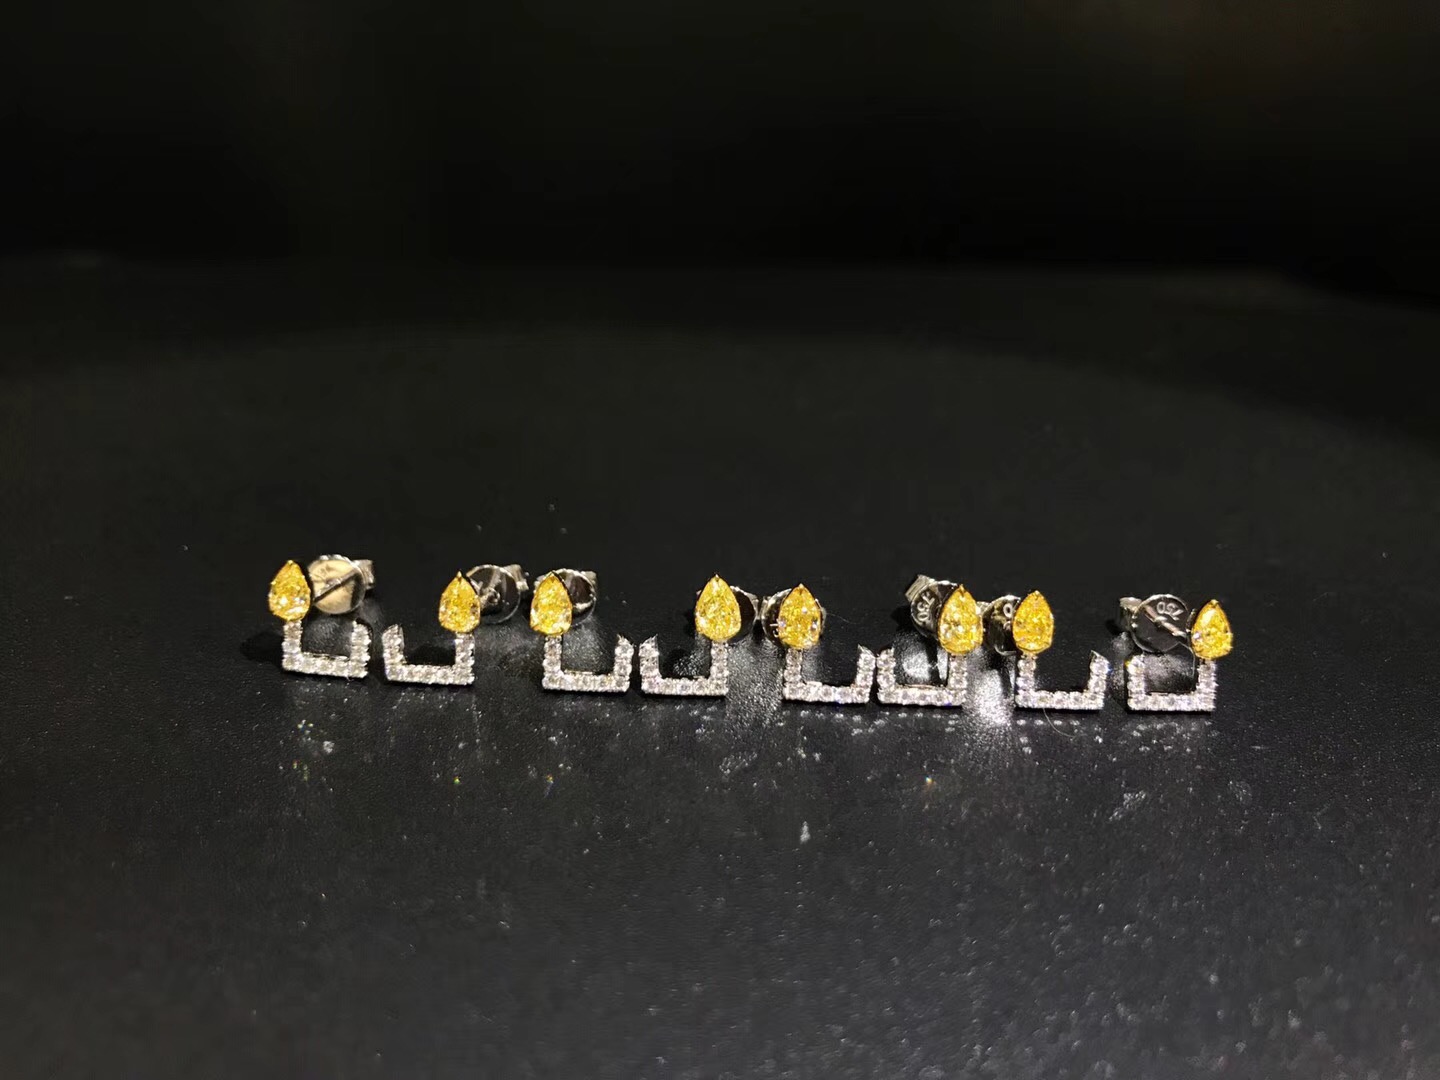 EW03770 Yellow Diamond pear-shaped Earrings